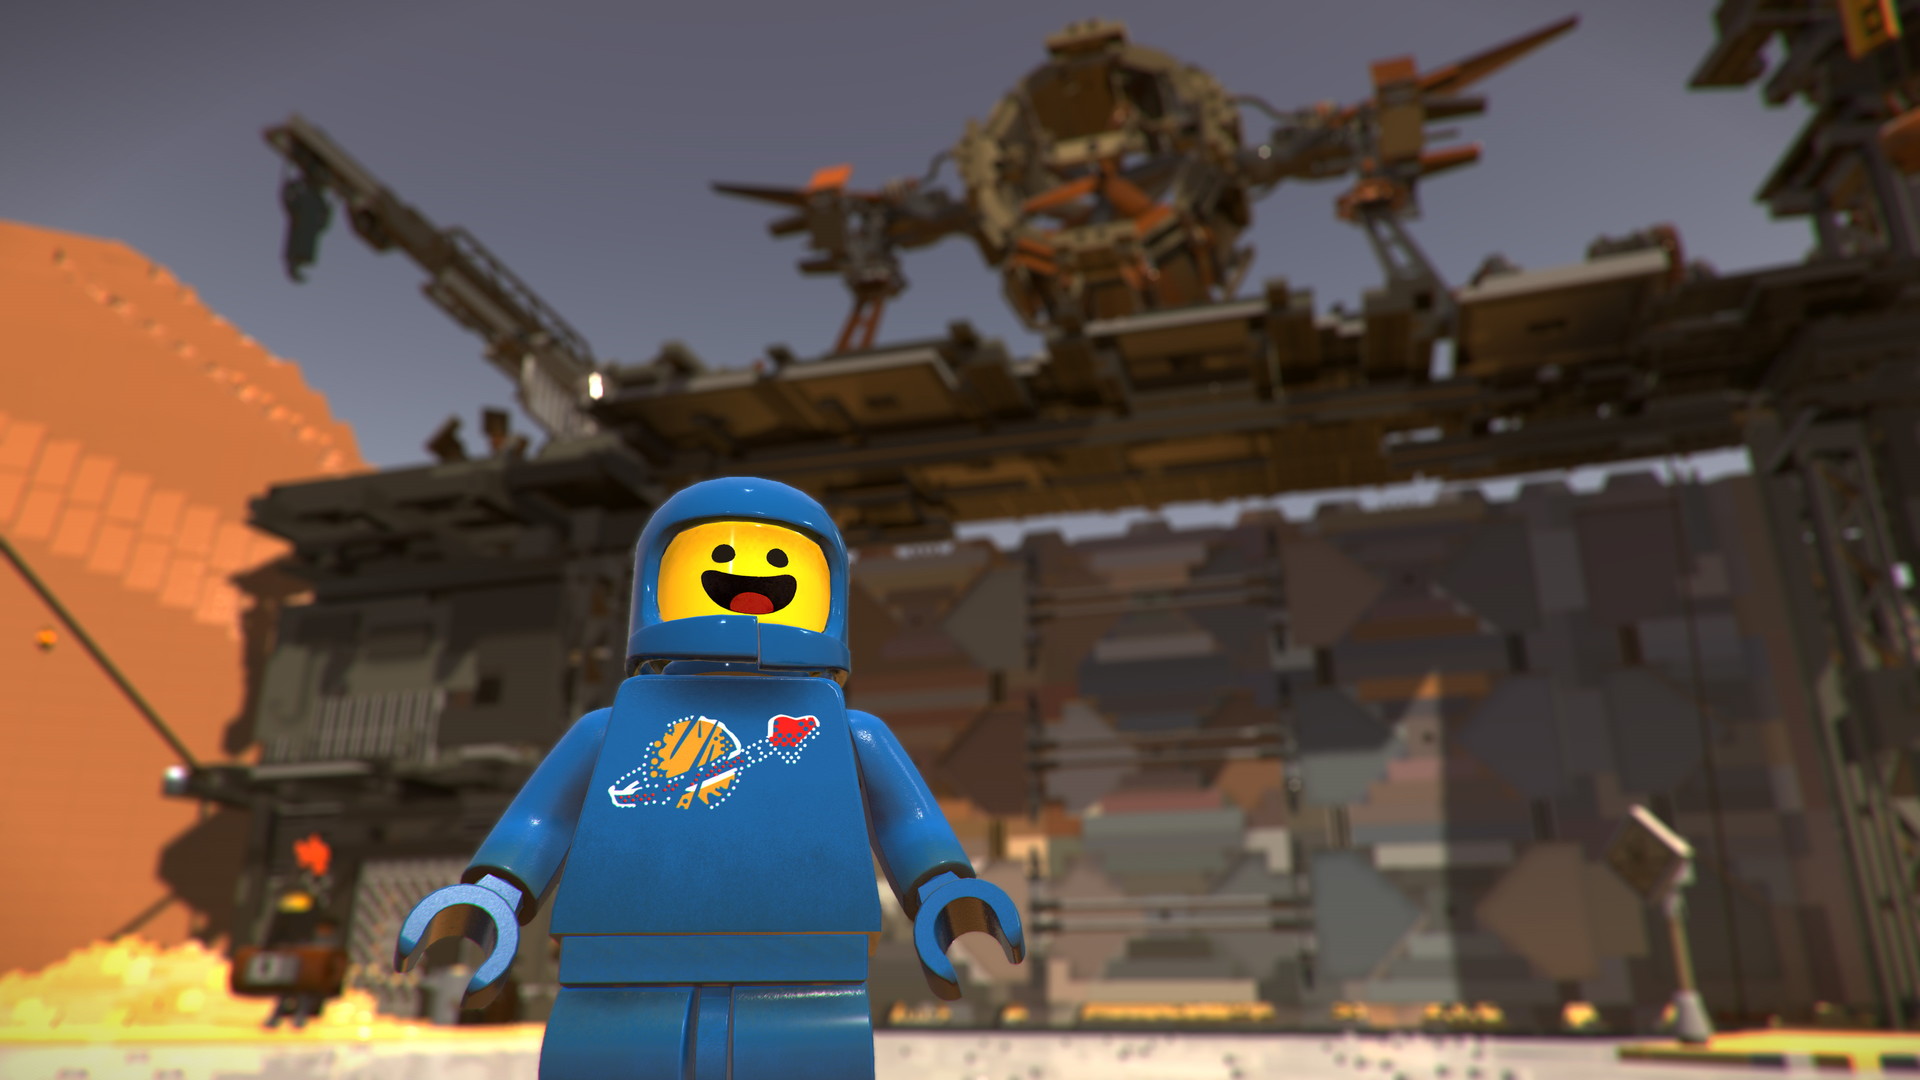 The LEGO Movie 2 Videogame - screenshot 3